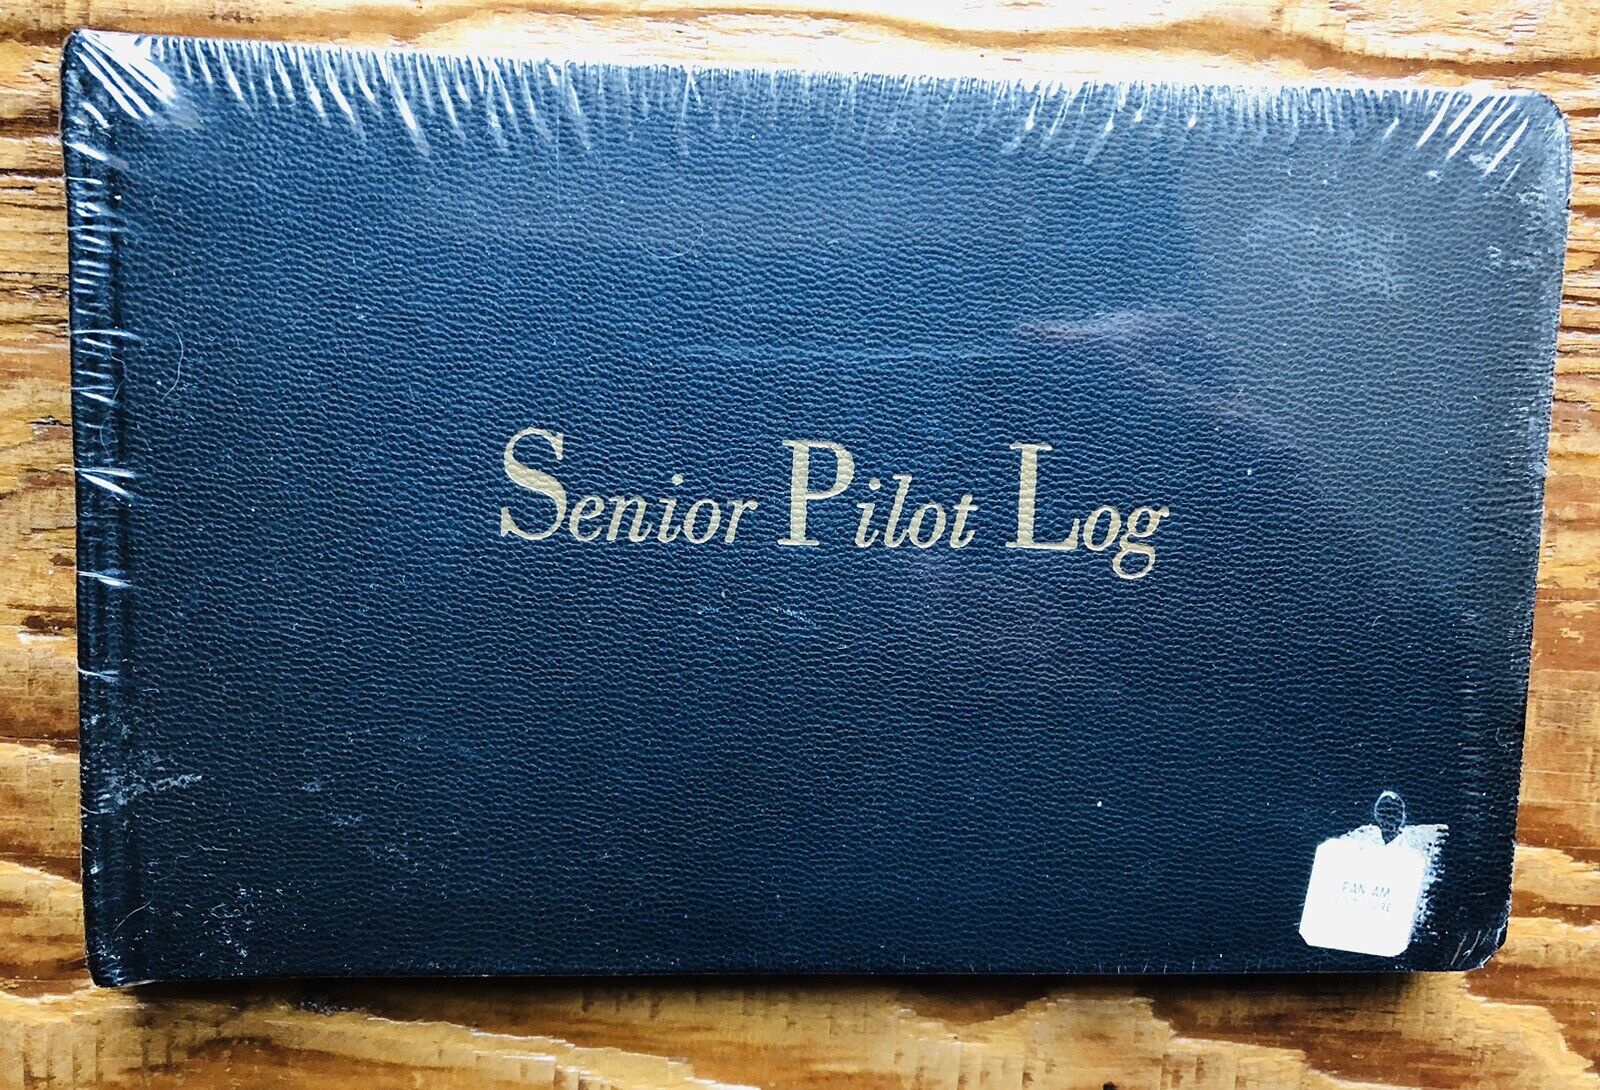 Pan Am Senior Pilot Log